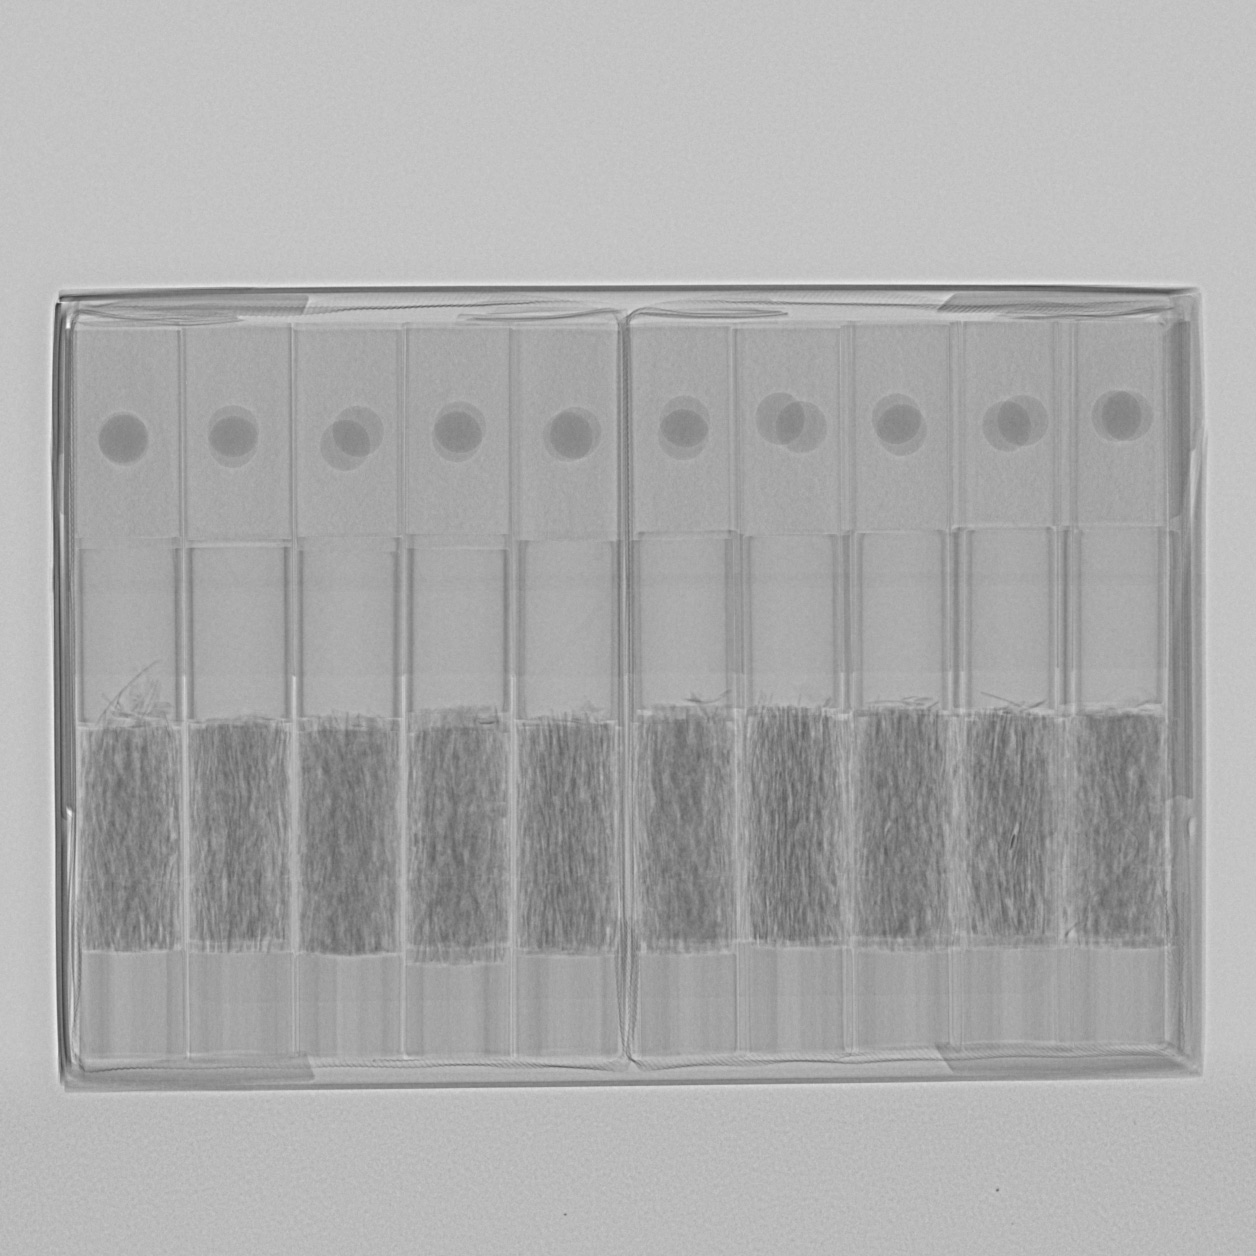 2D-изображение рентгена пачки сигарет